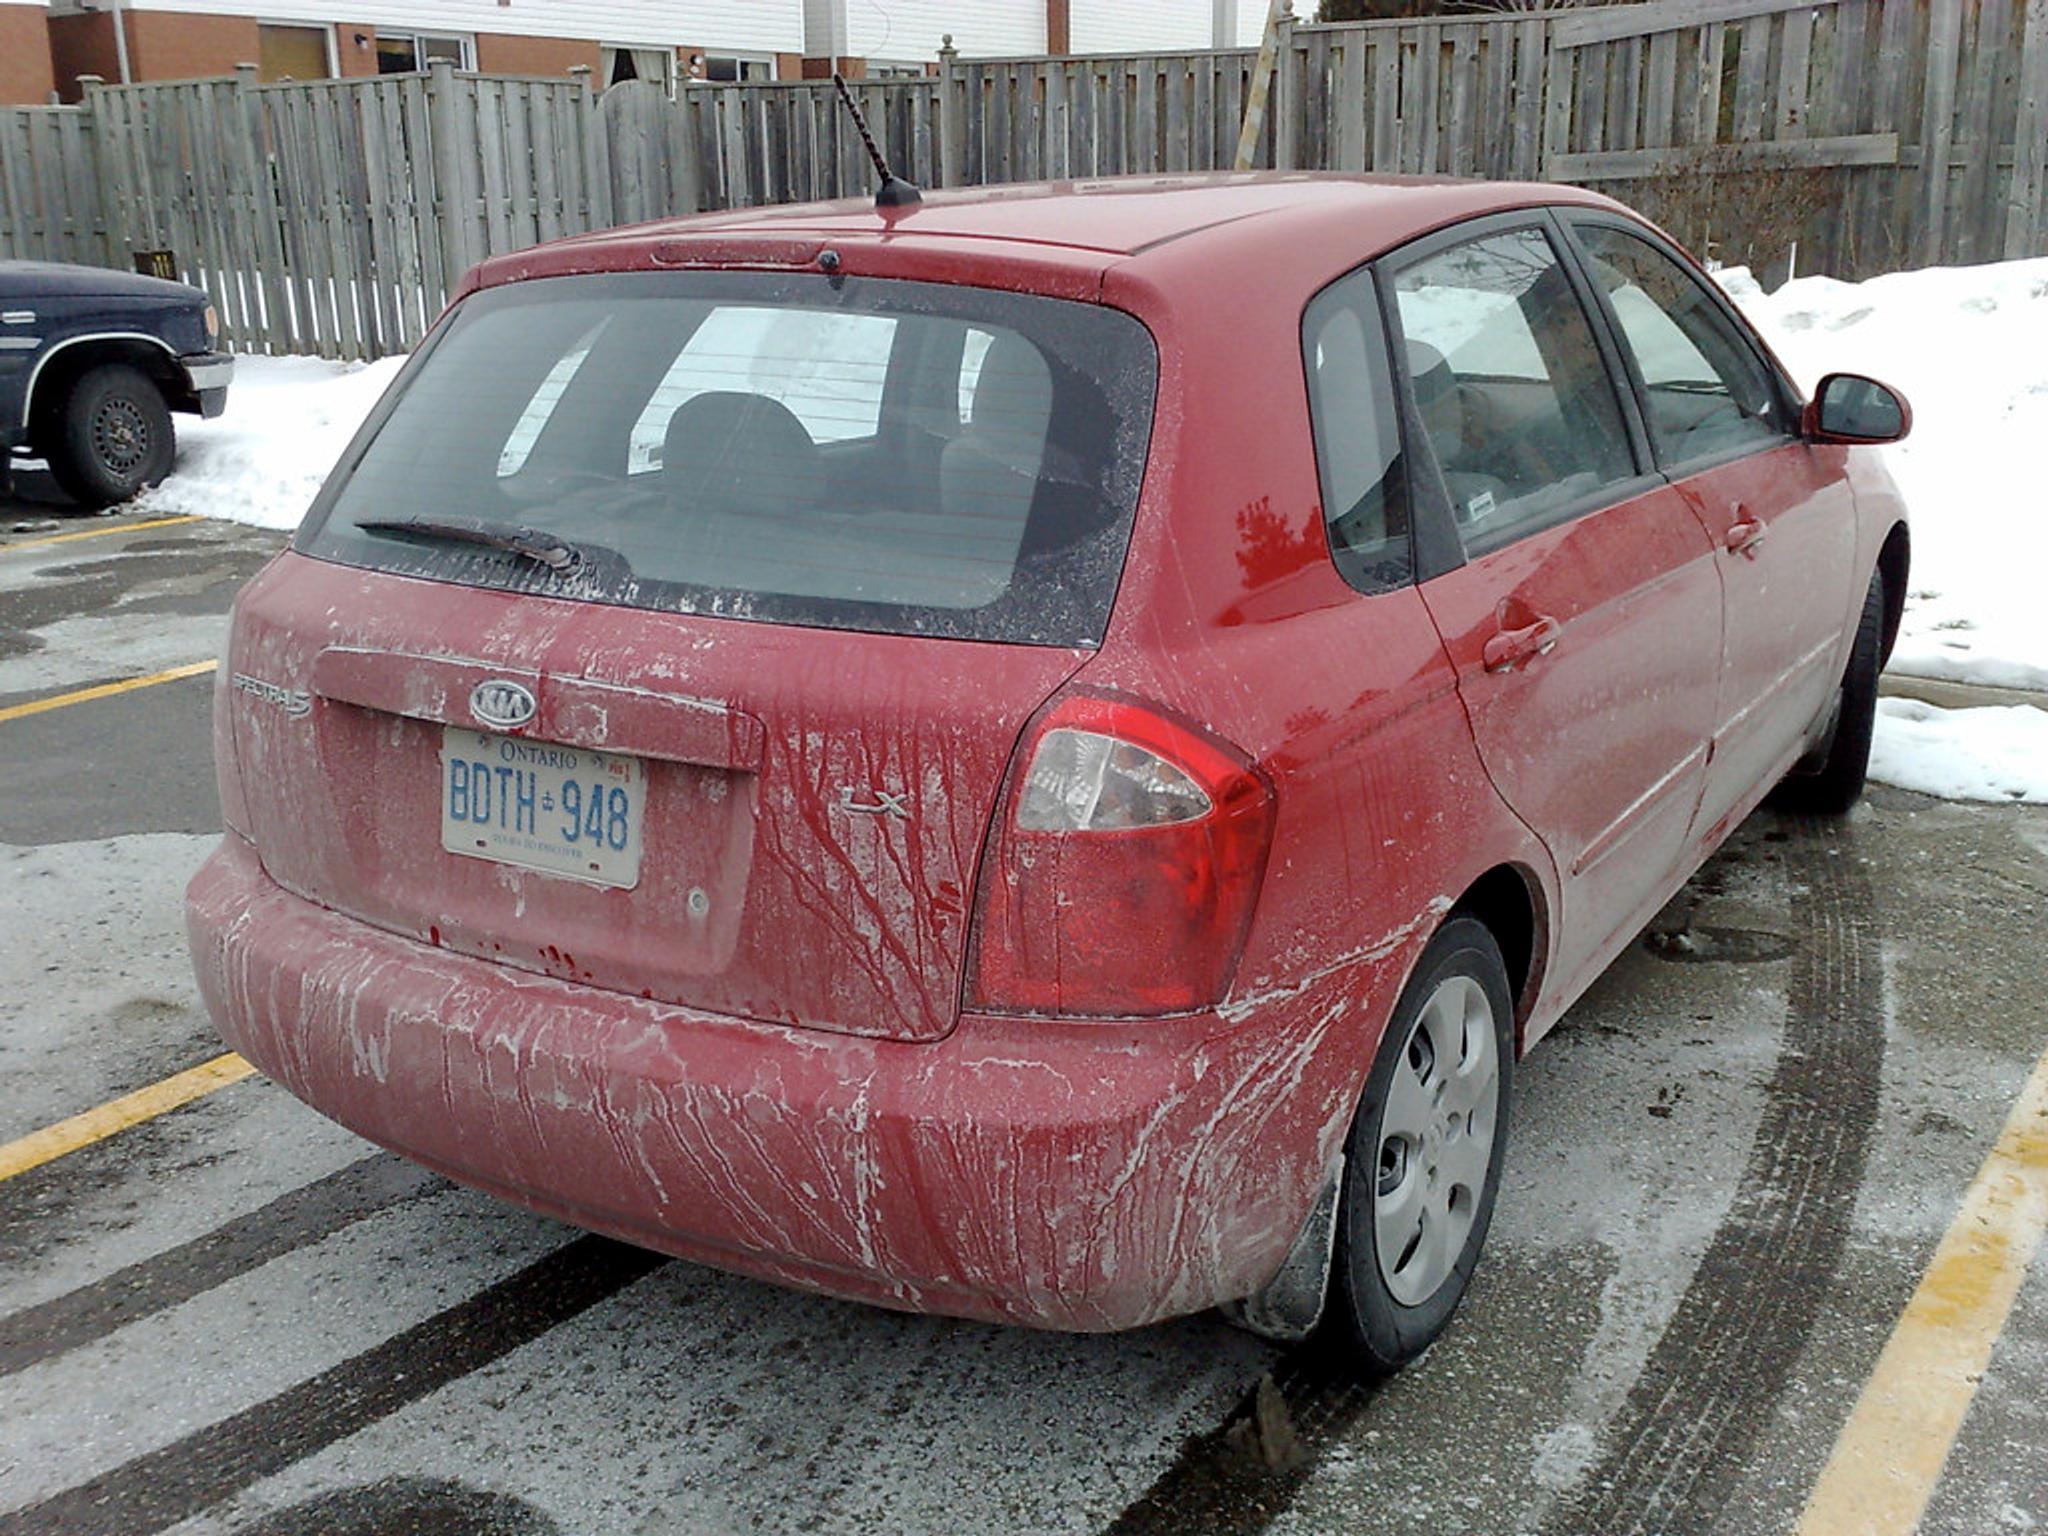 car covered in salt, winter salts on road, kia spectra, red kia